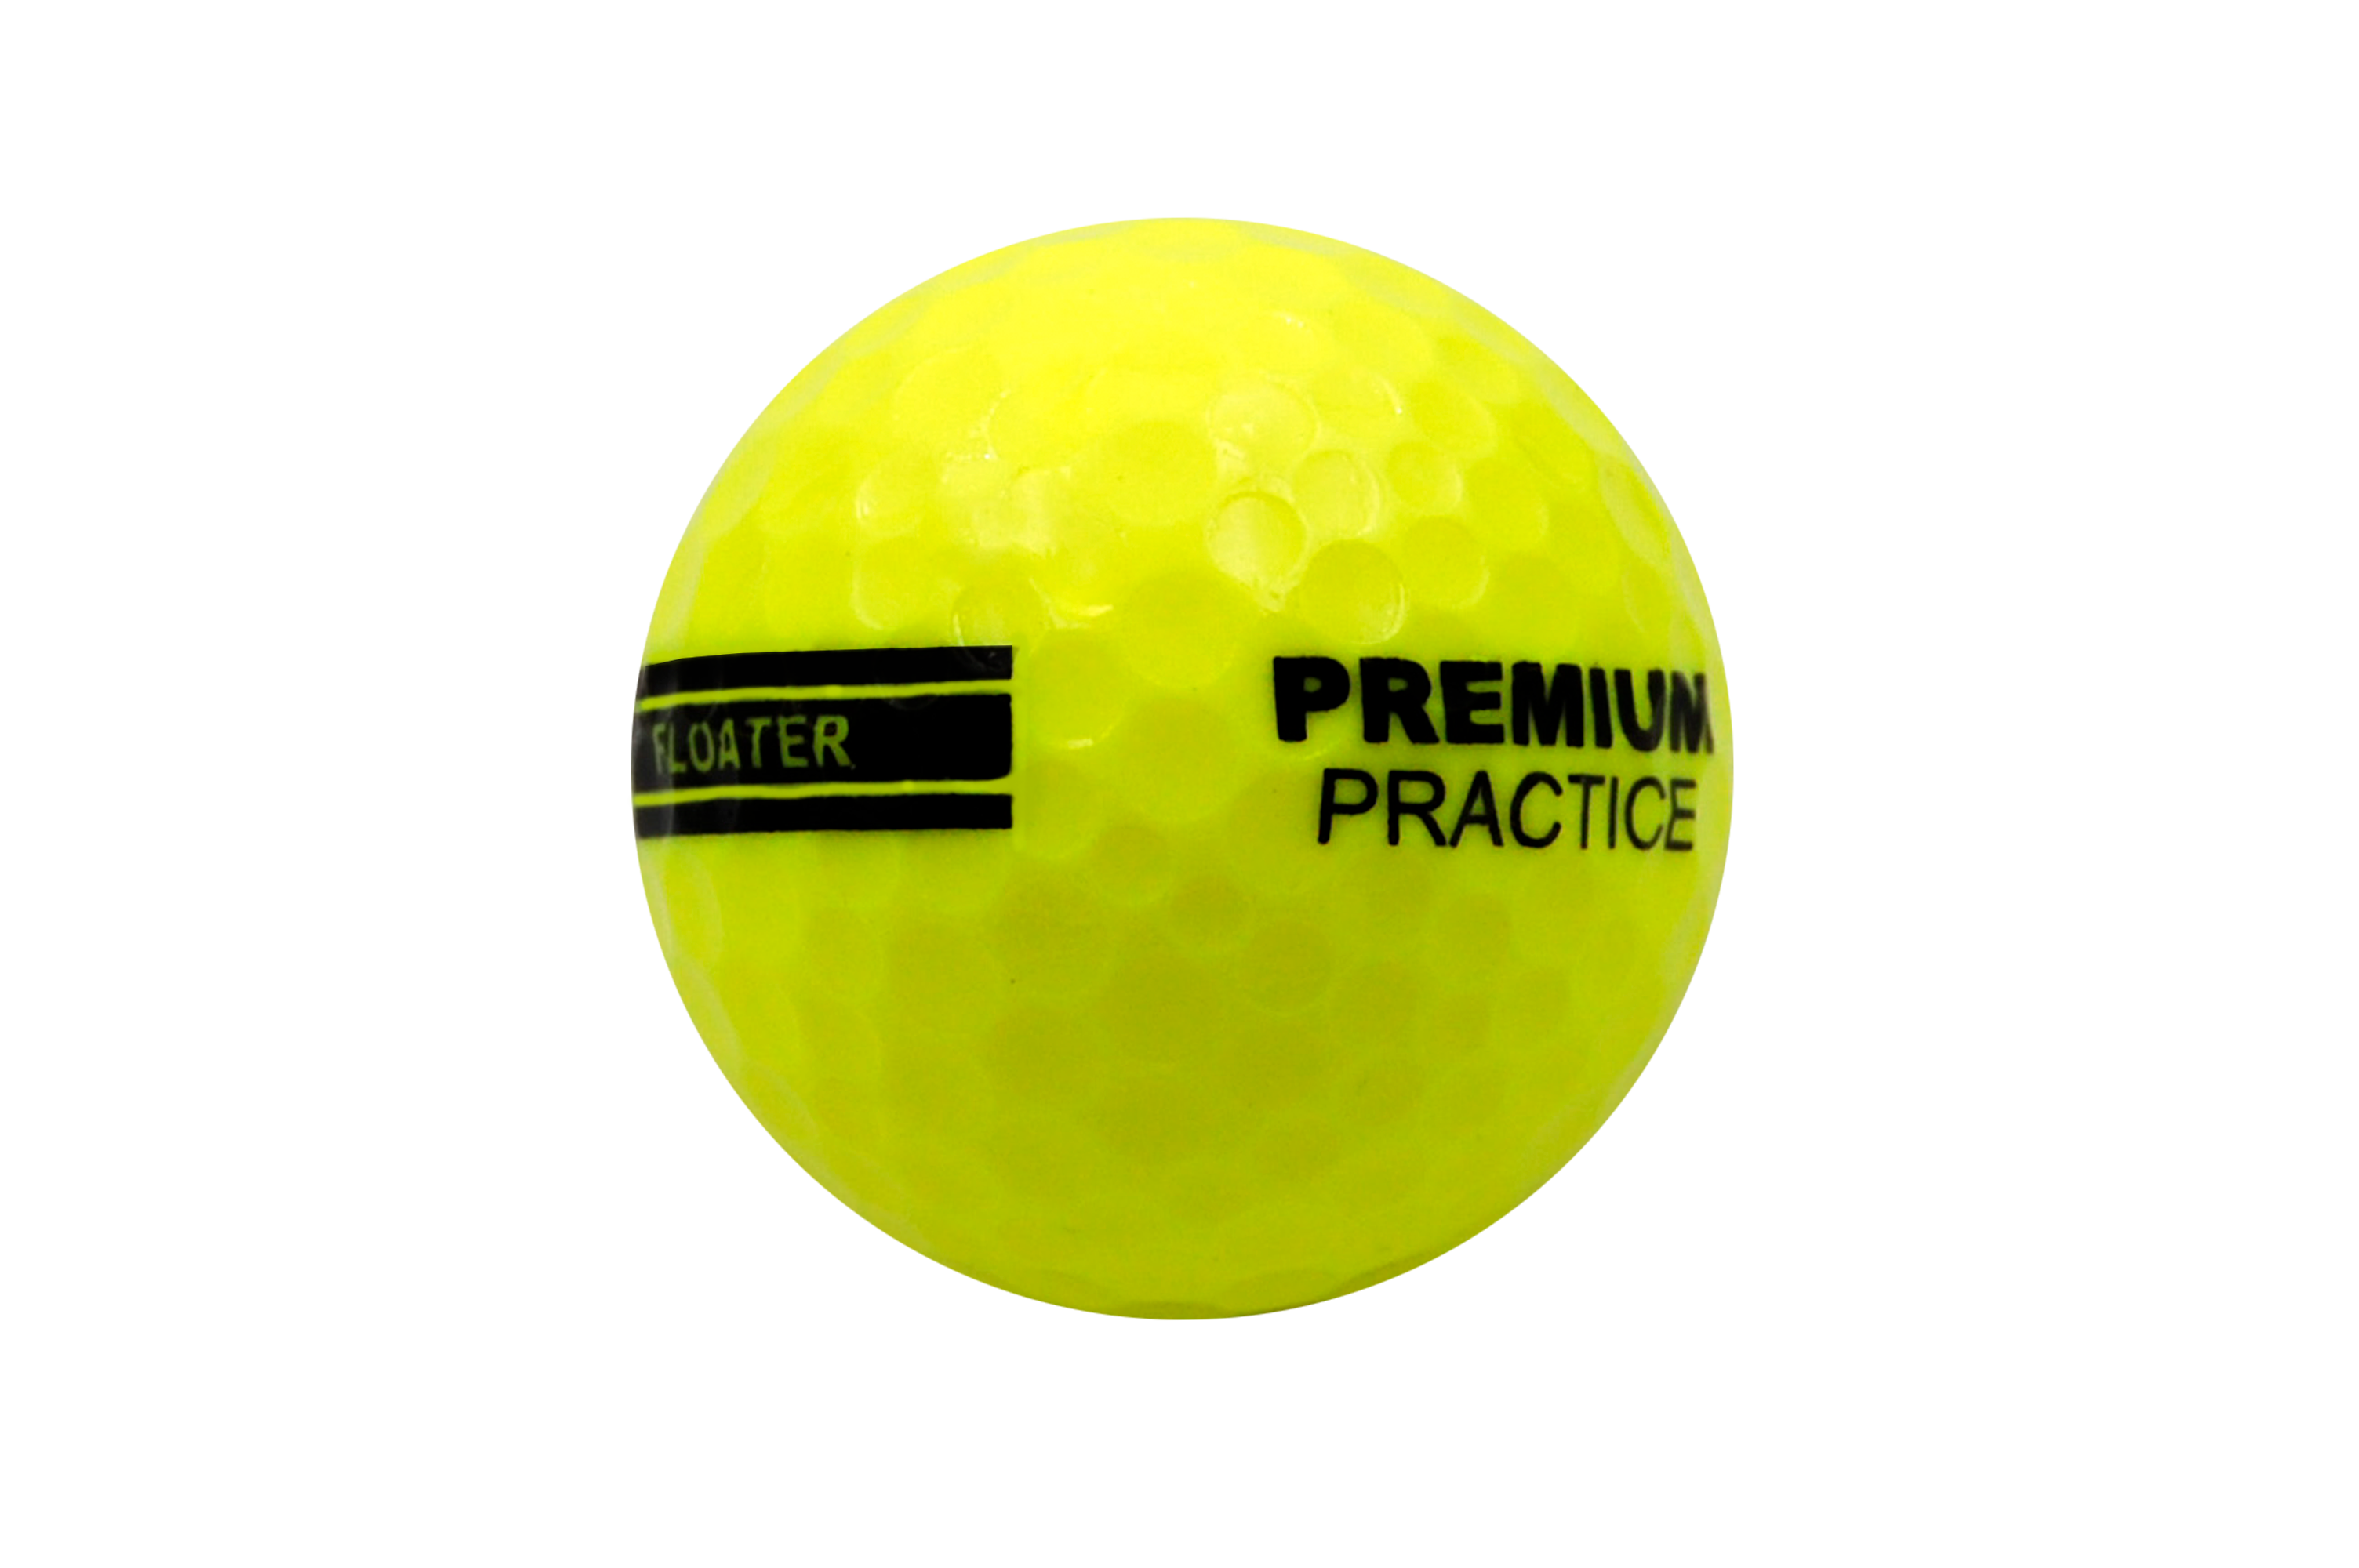 FLOATER RANGE BALL PREMIUM PRACTICE Yellow, Box 300 Balls (25DZ)